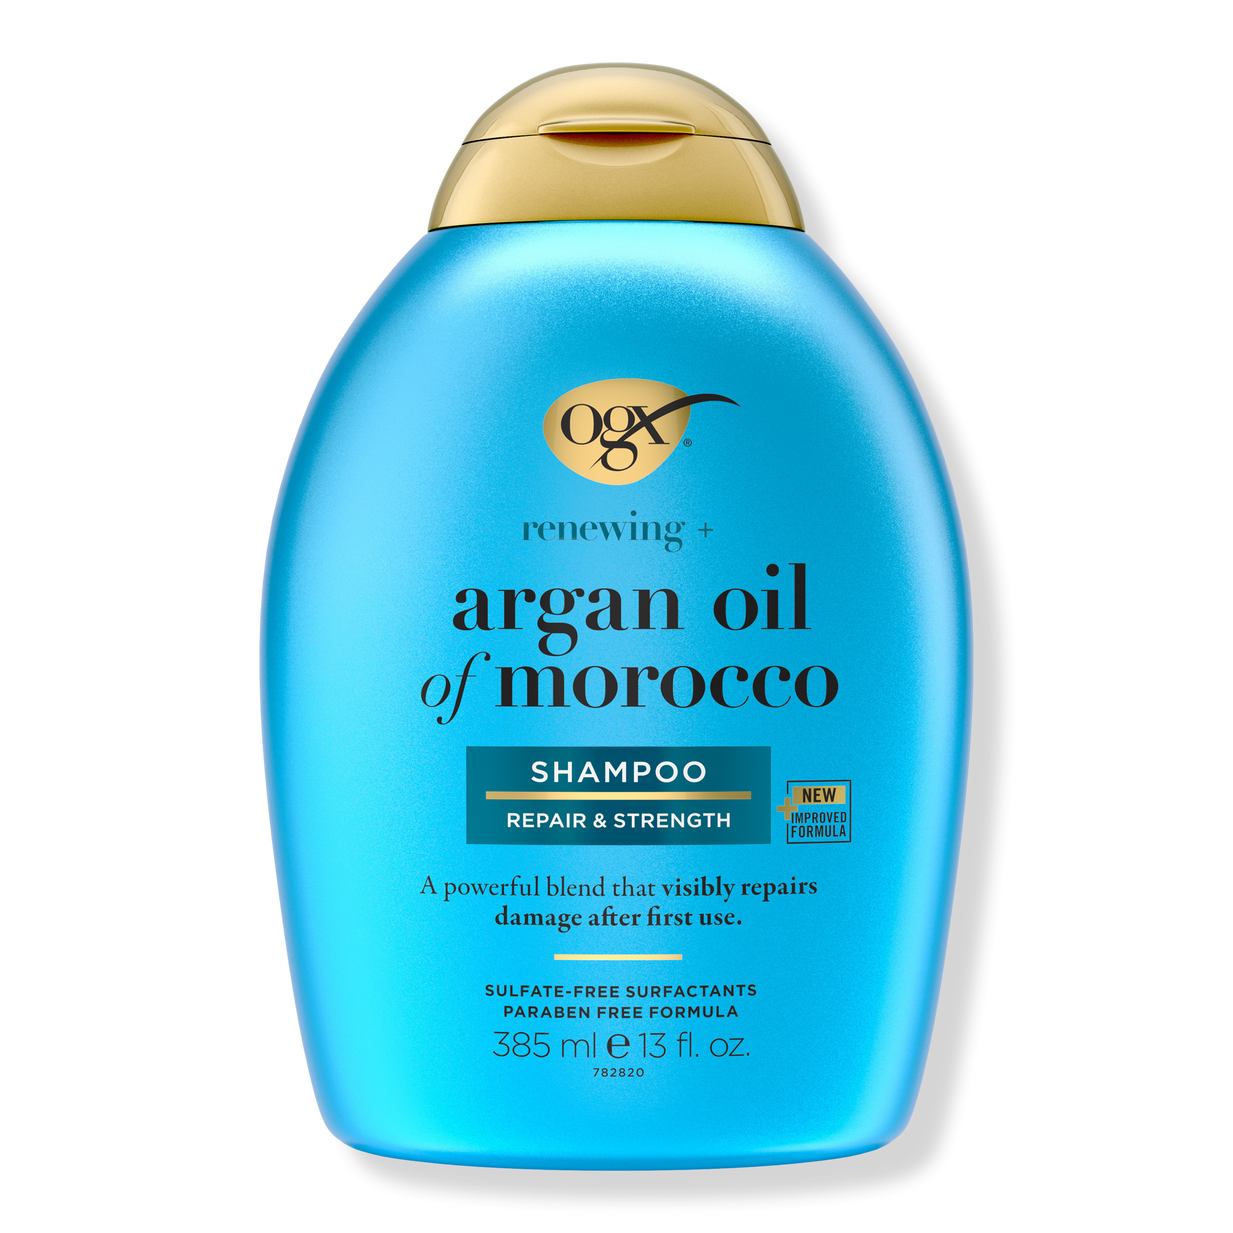 Drik vand Isse Disciplin Renewing + Argan Oil of Morocco Shampoo - OGX | Ulta Beauty